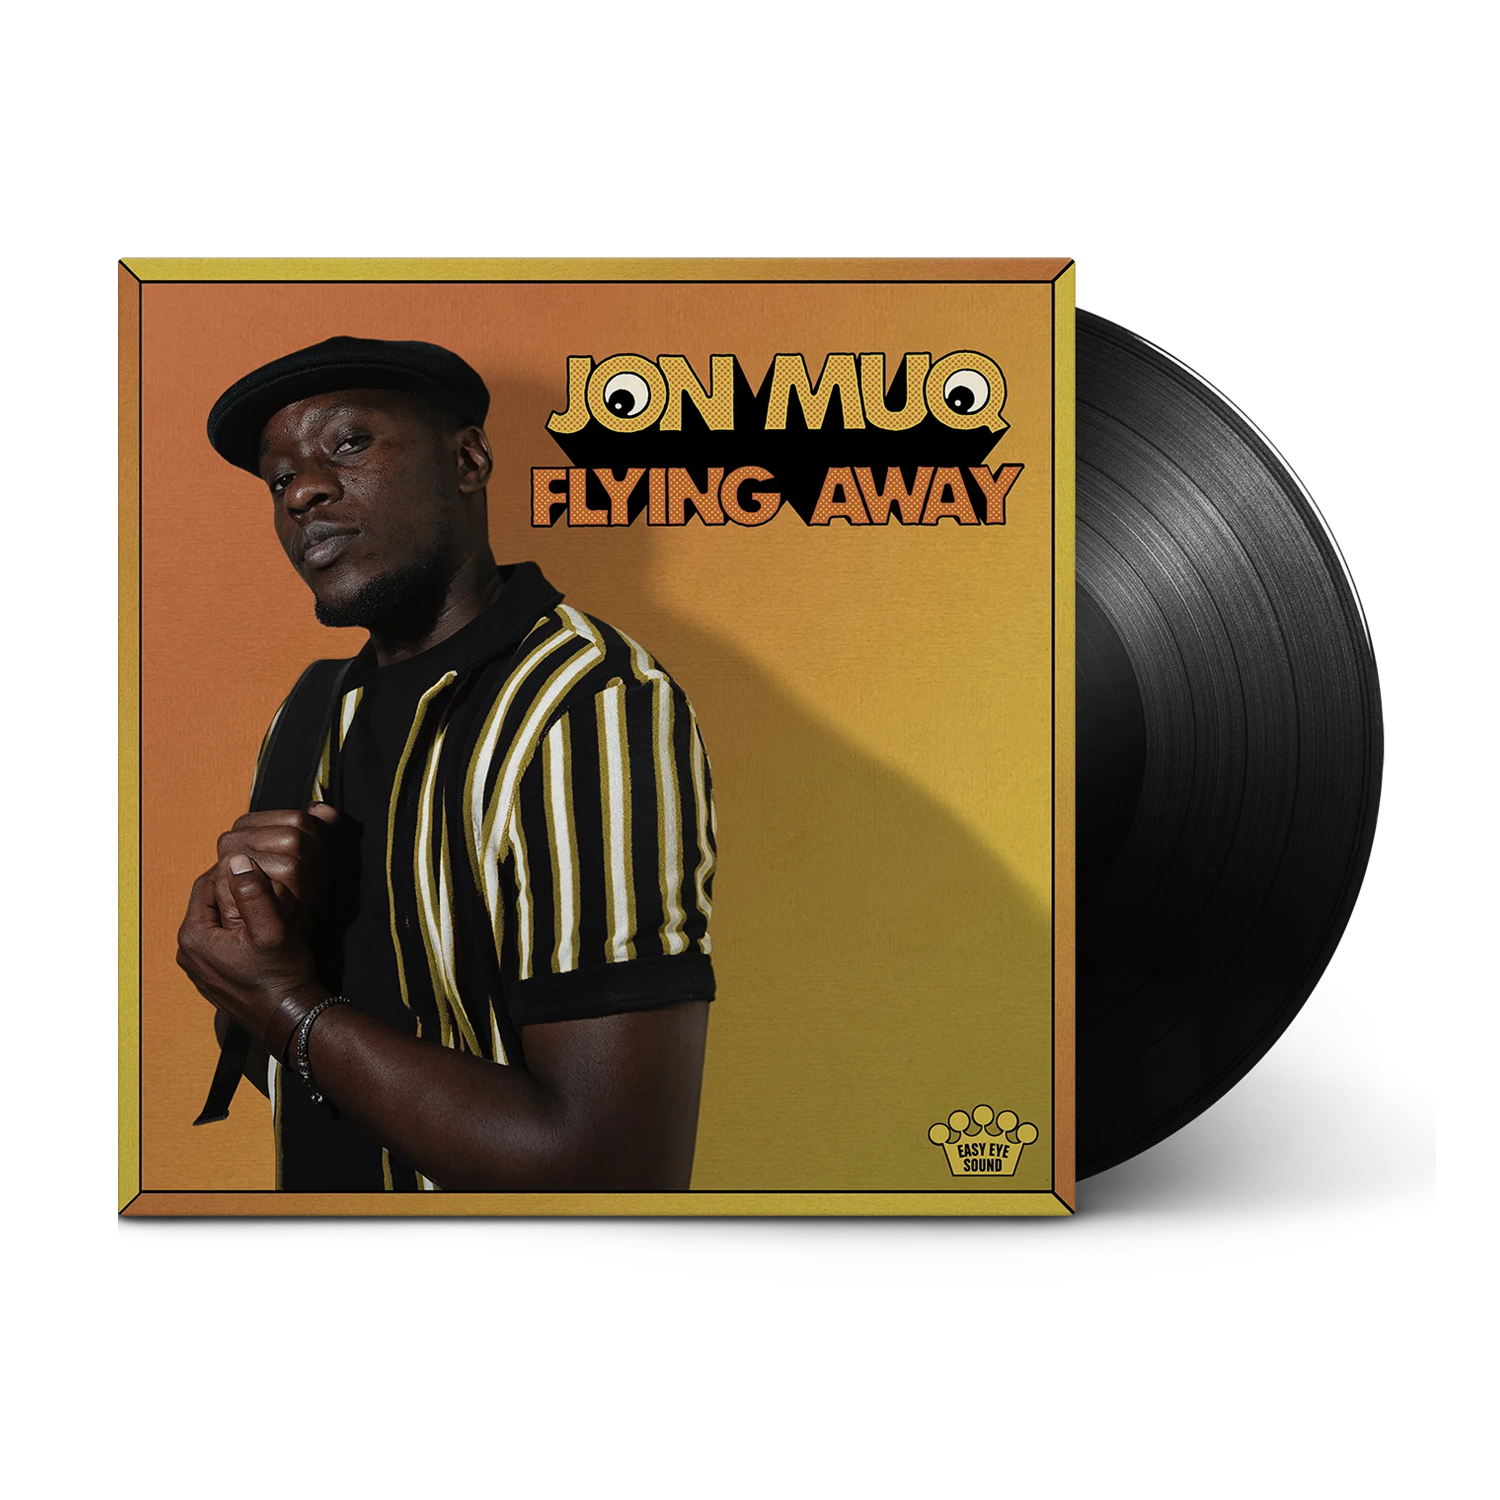 Jon Muq - Flying Away: Vinyl LP